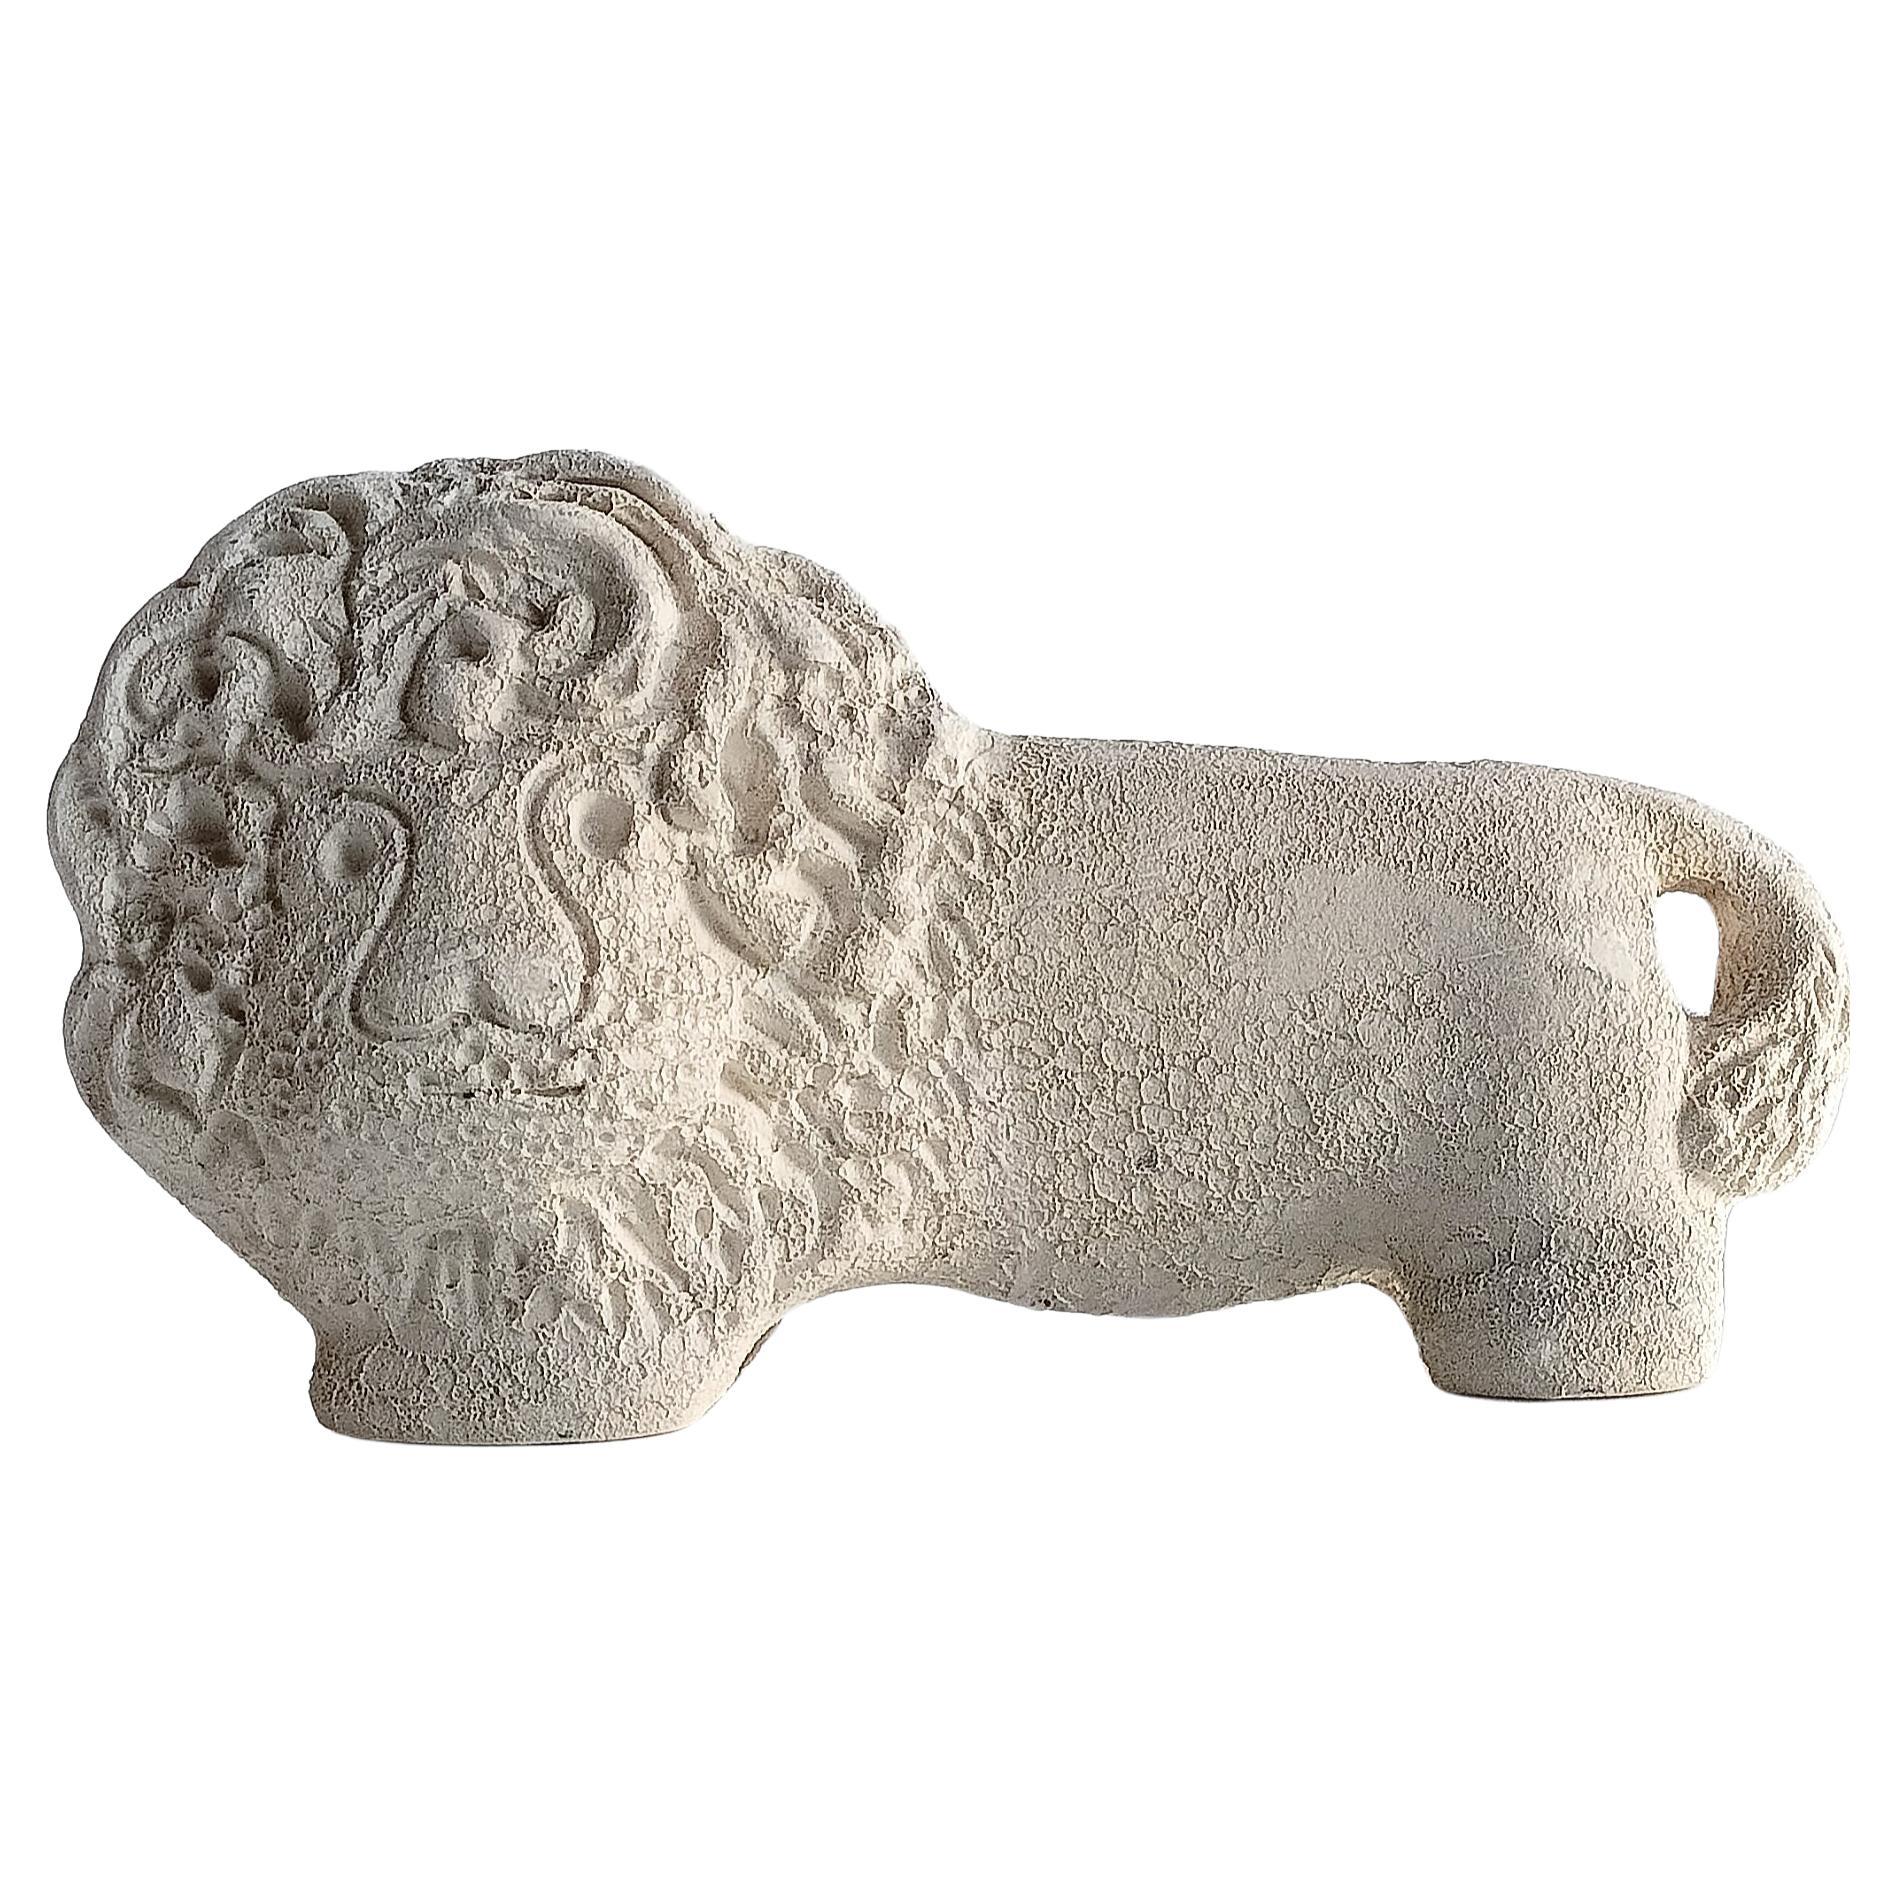 Bitossi by Aldo Londi Vintage Mid Century Ceramic Lion Sculpture, Italy, 1960s For Sale